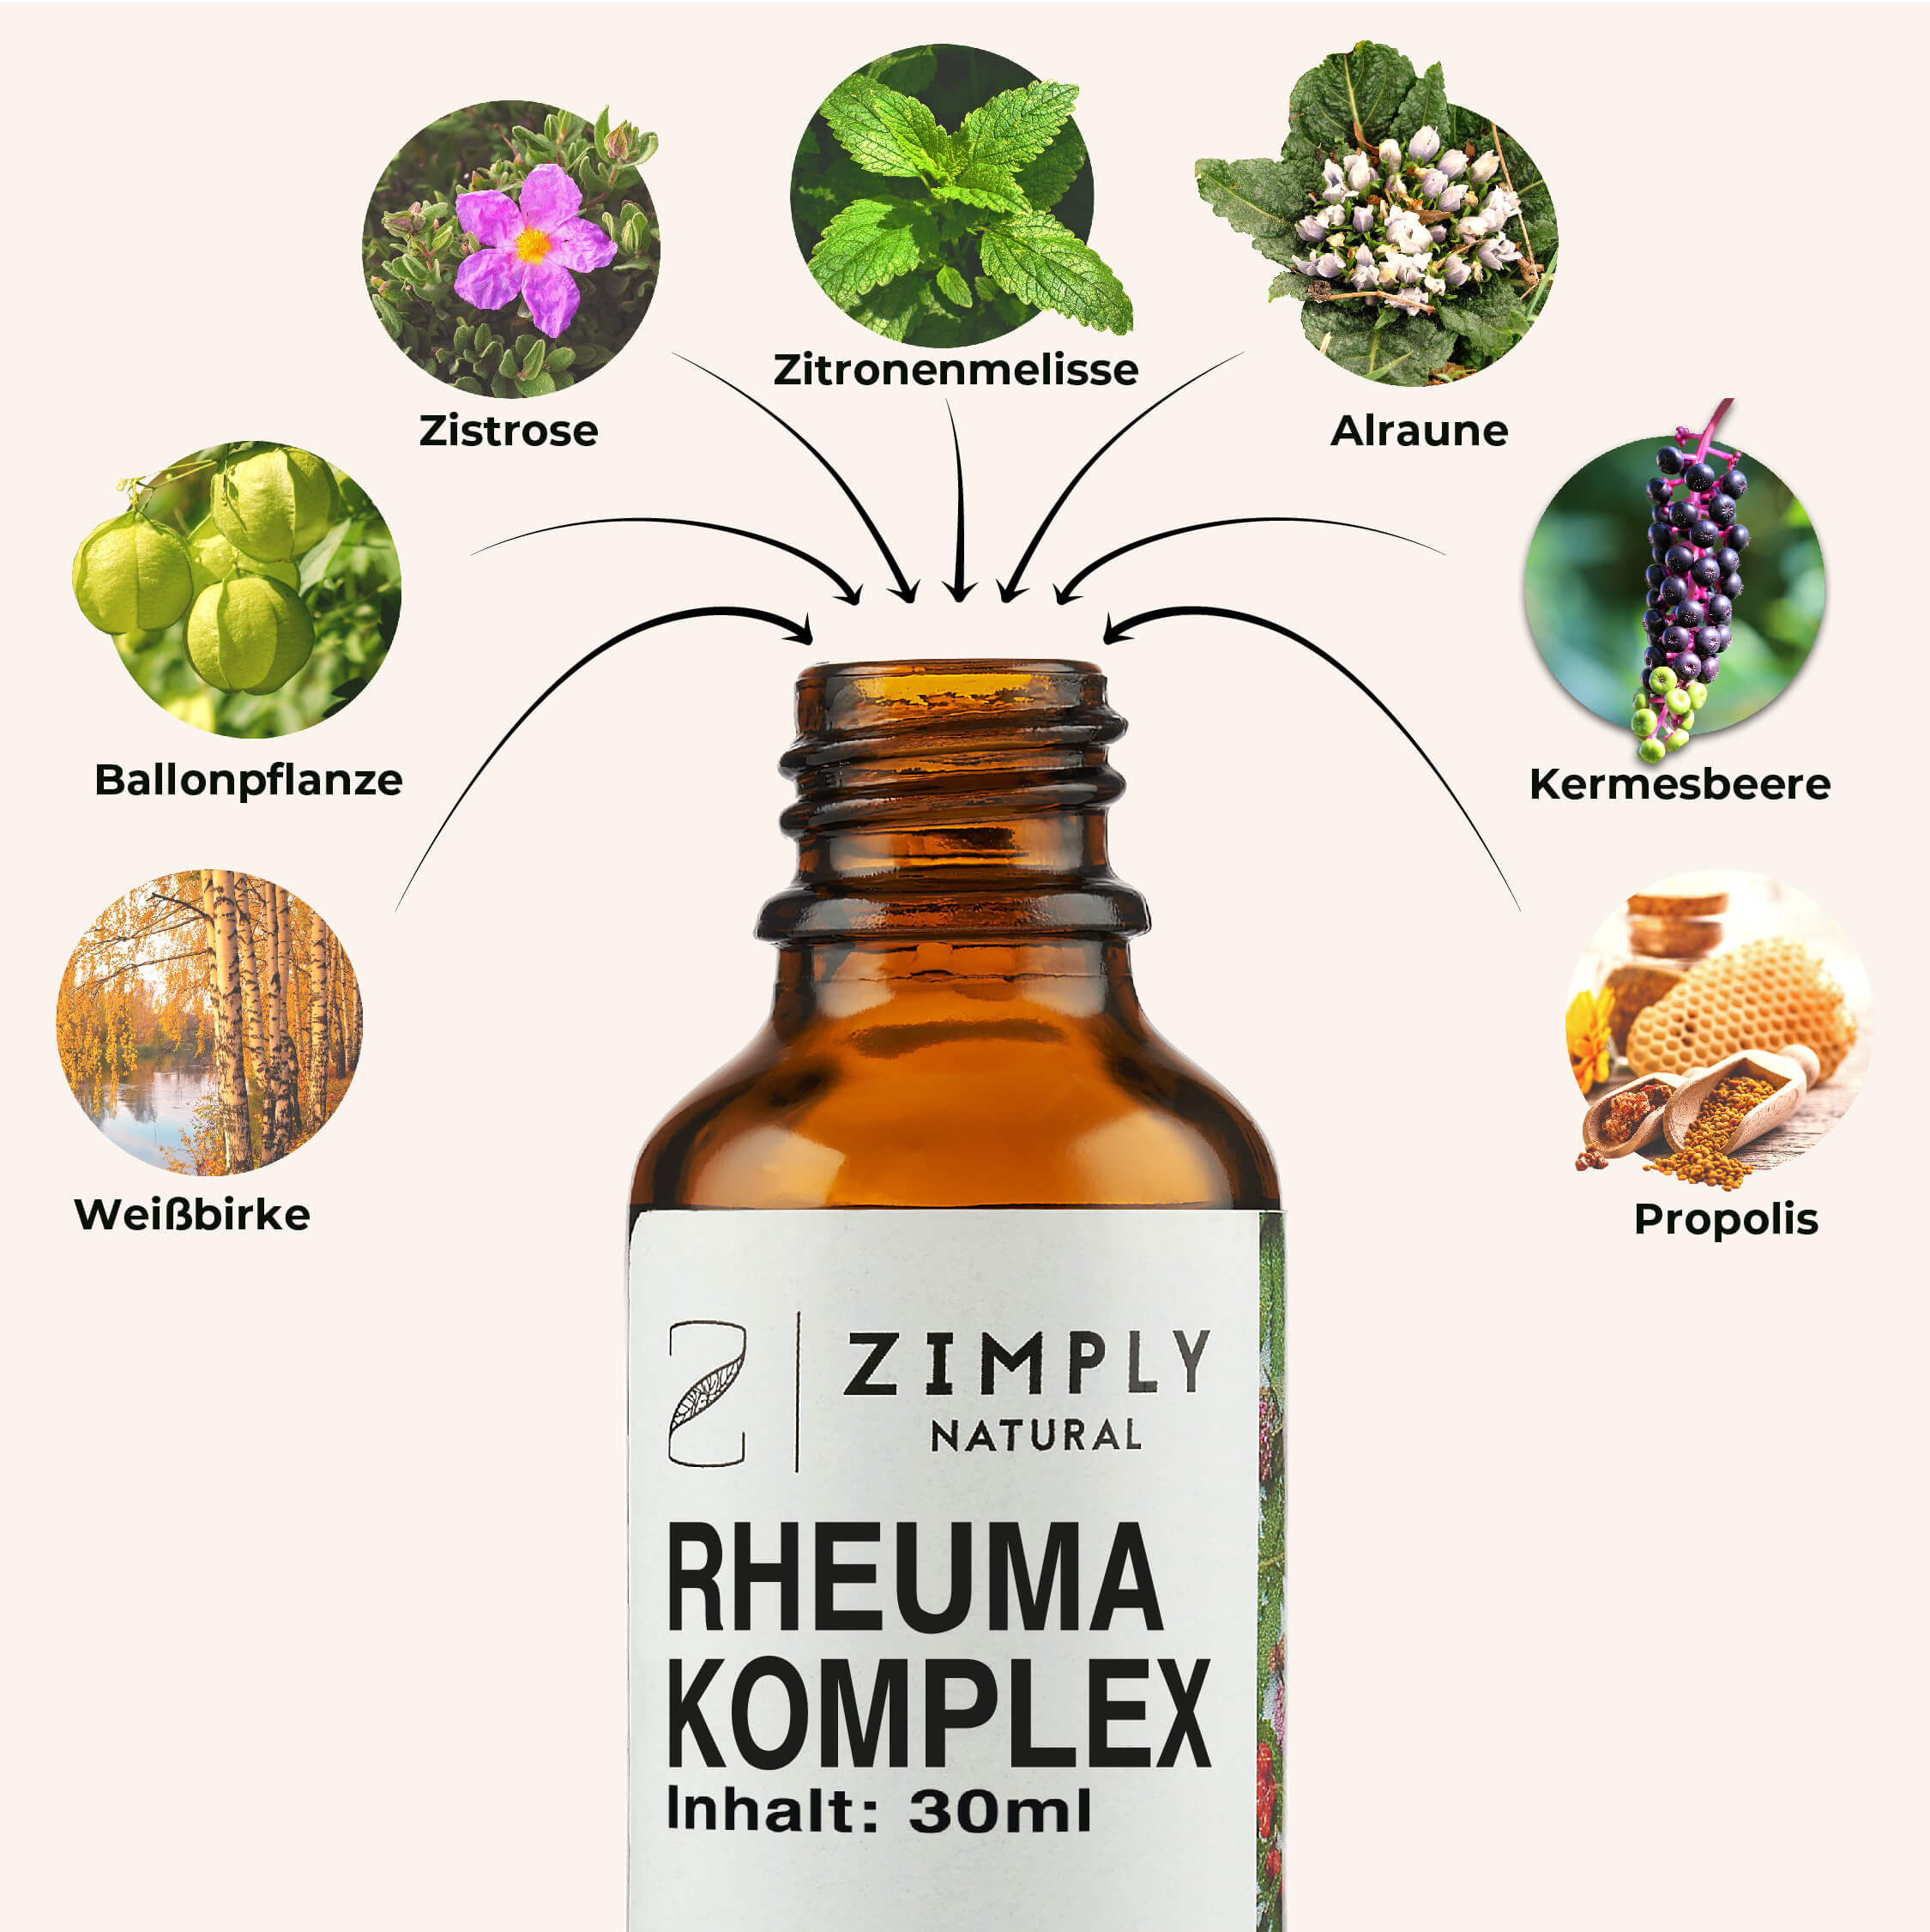 Zimply Natural Rheumatism Complex Mixture